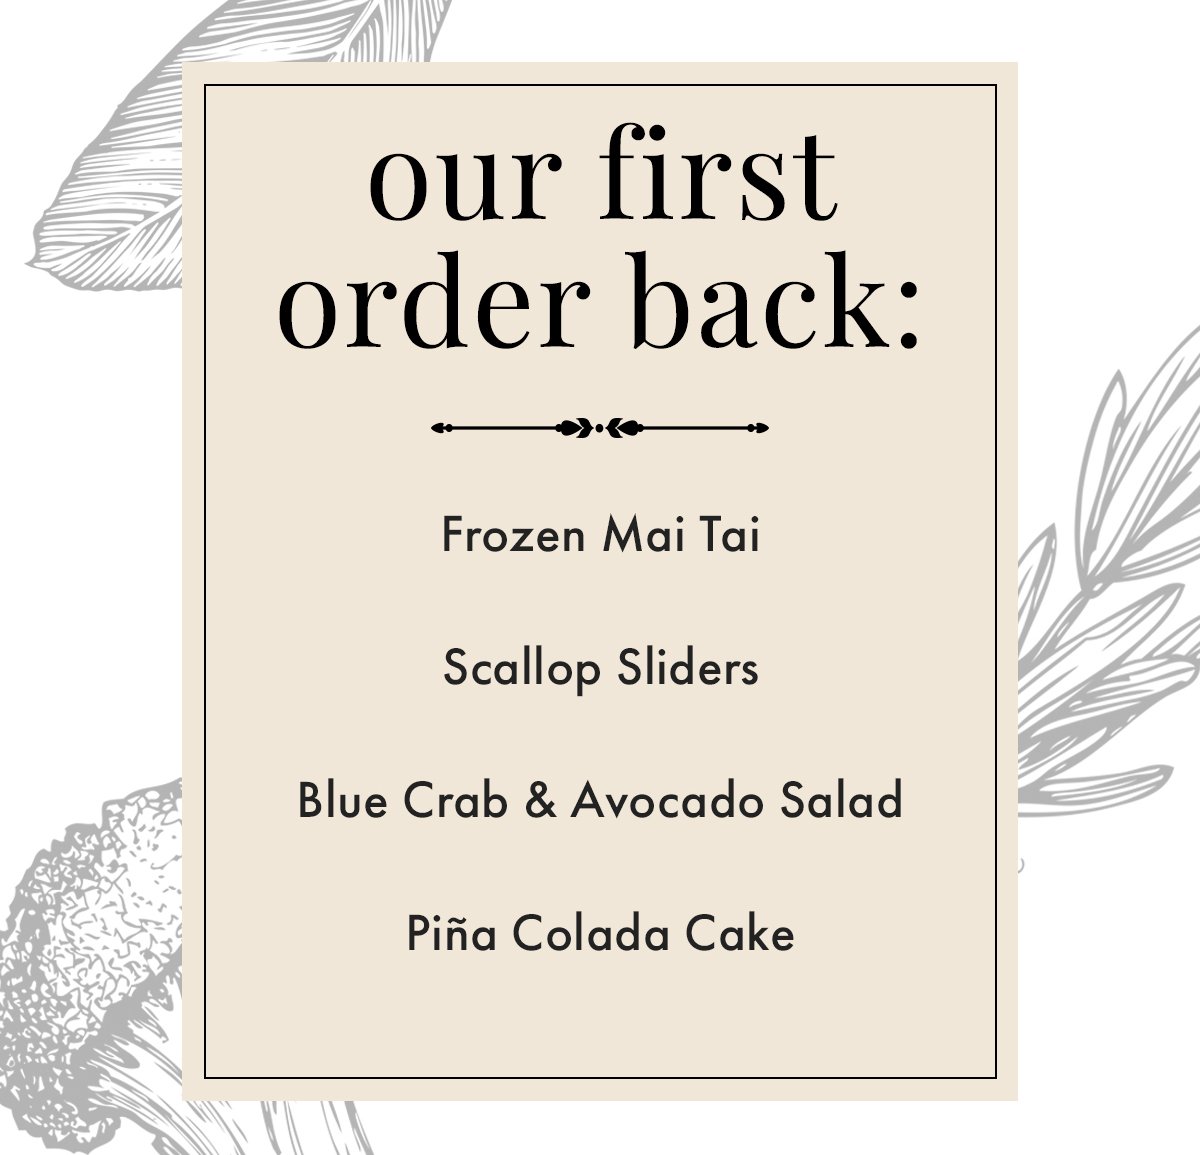 Our first order back: Frozen Mai Tai, Scallop Sliders, Blue Crab & Avocado Salad, Pina Colada Cake.